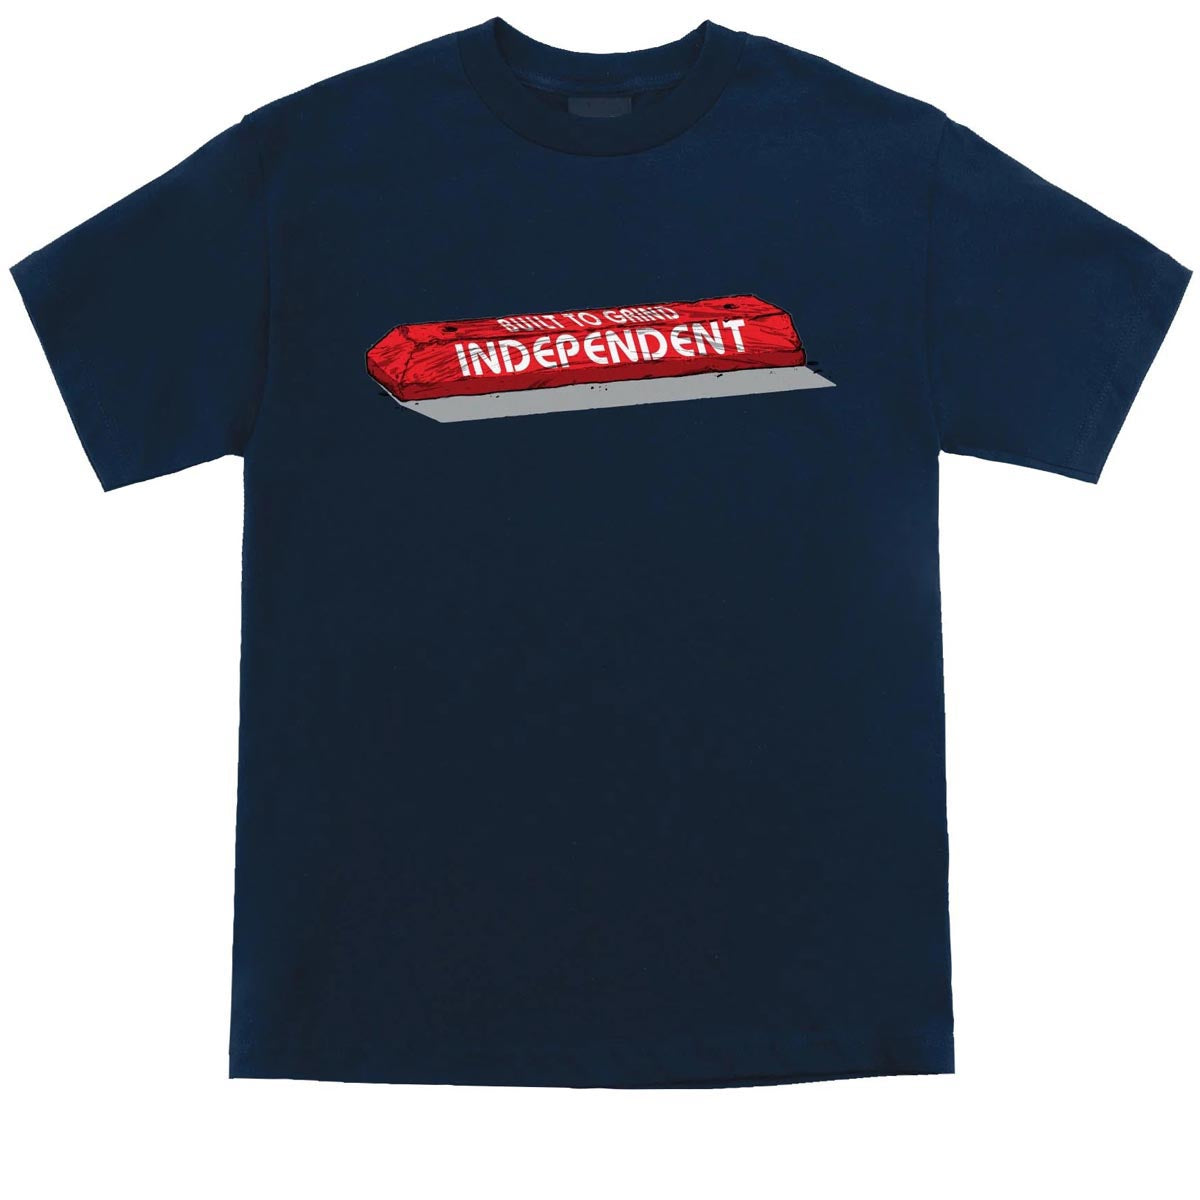 Independent BTG Curb T-Shirt - Navy image 1